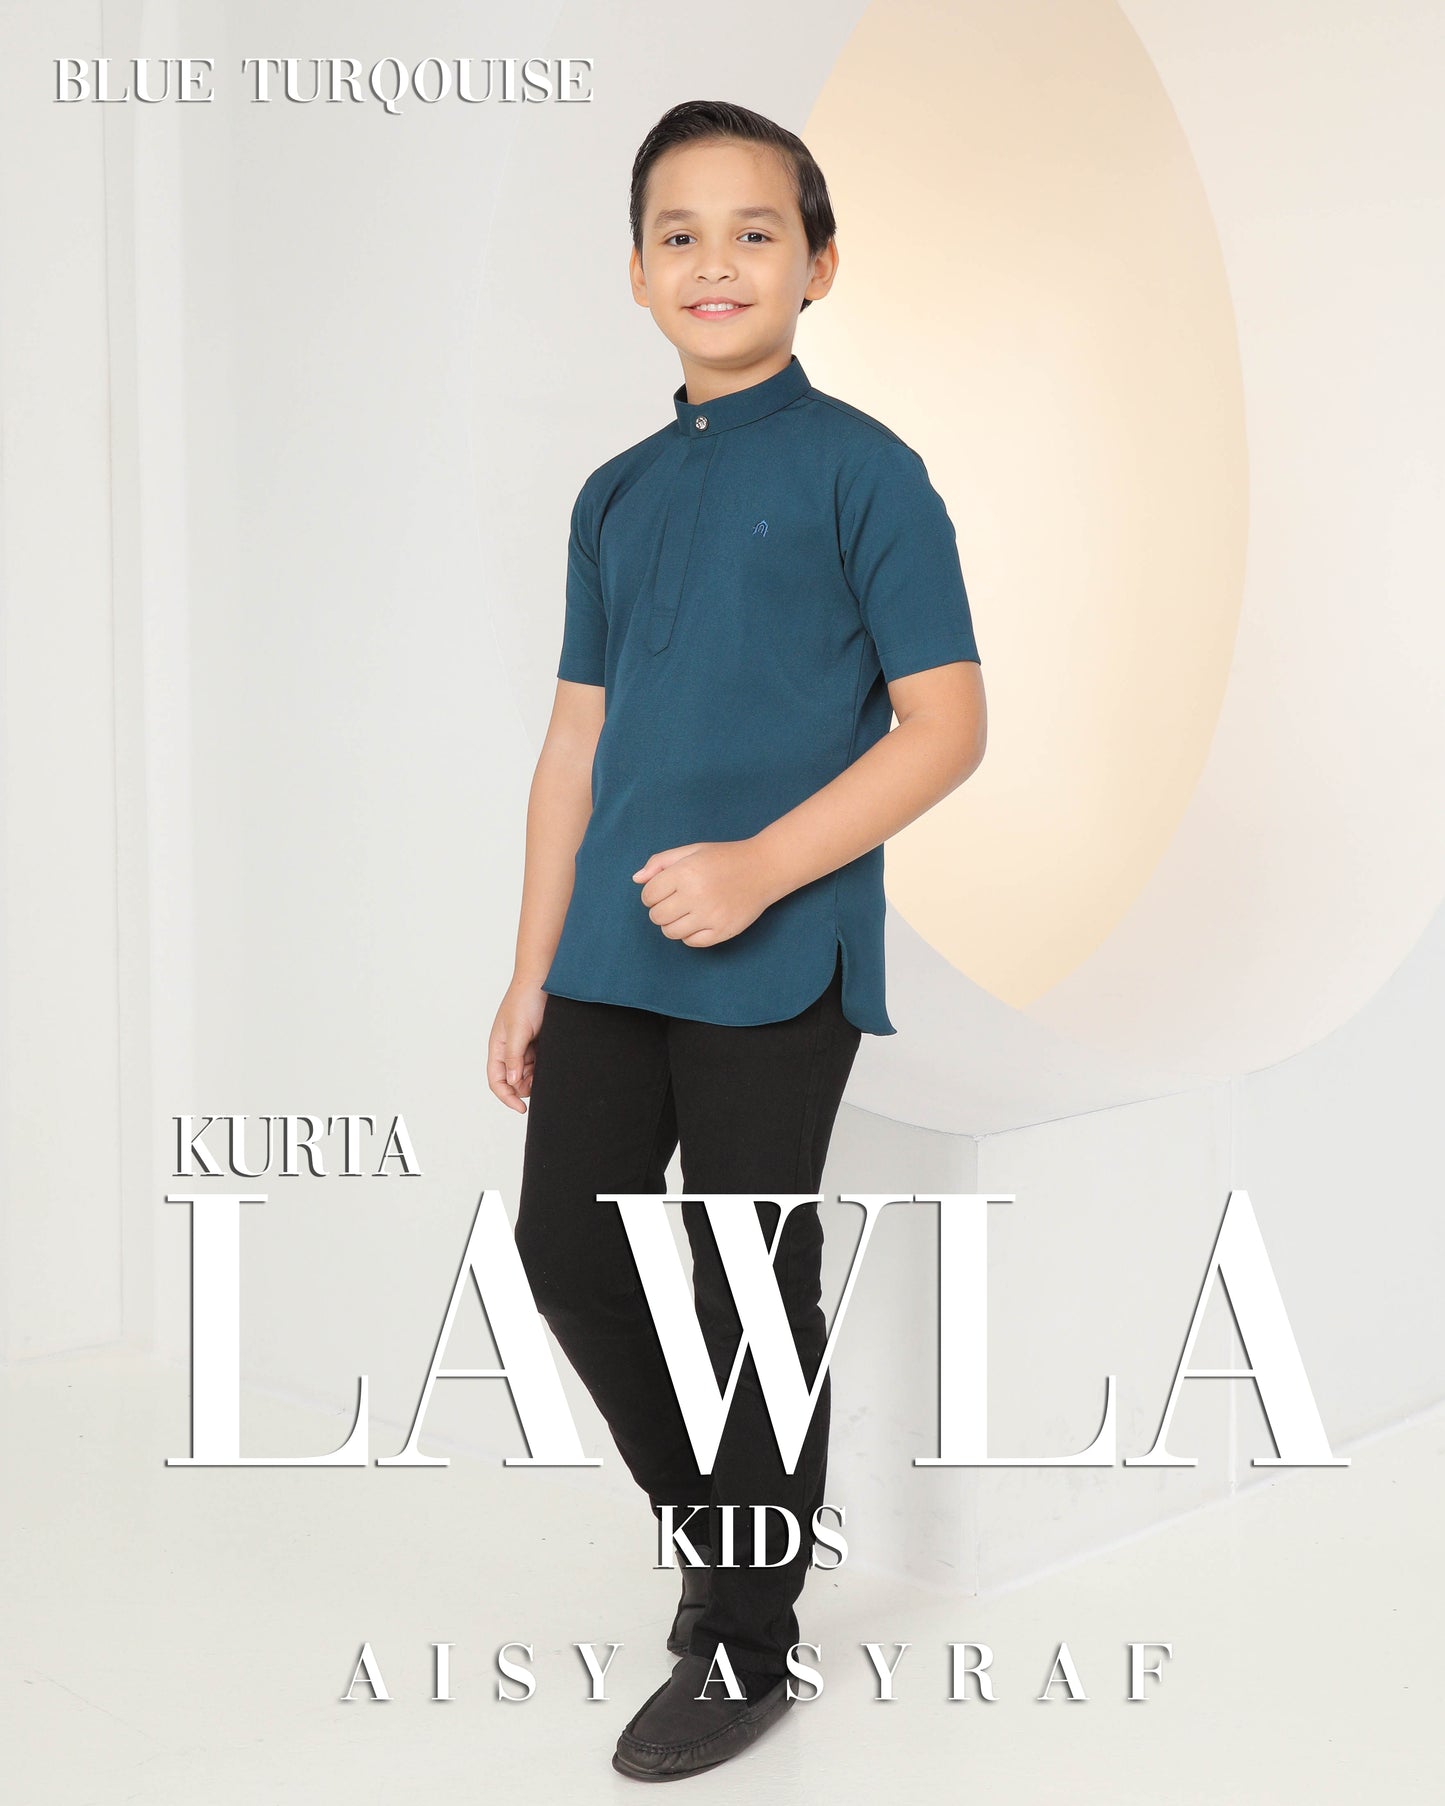 Kurta Lawla Kids - Blue Turqouise